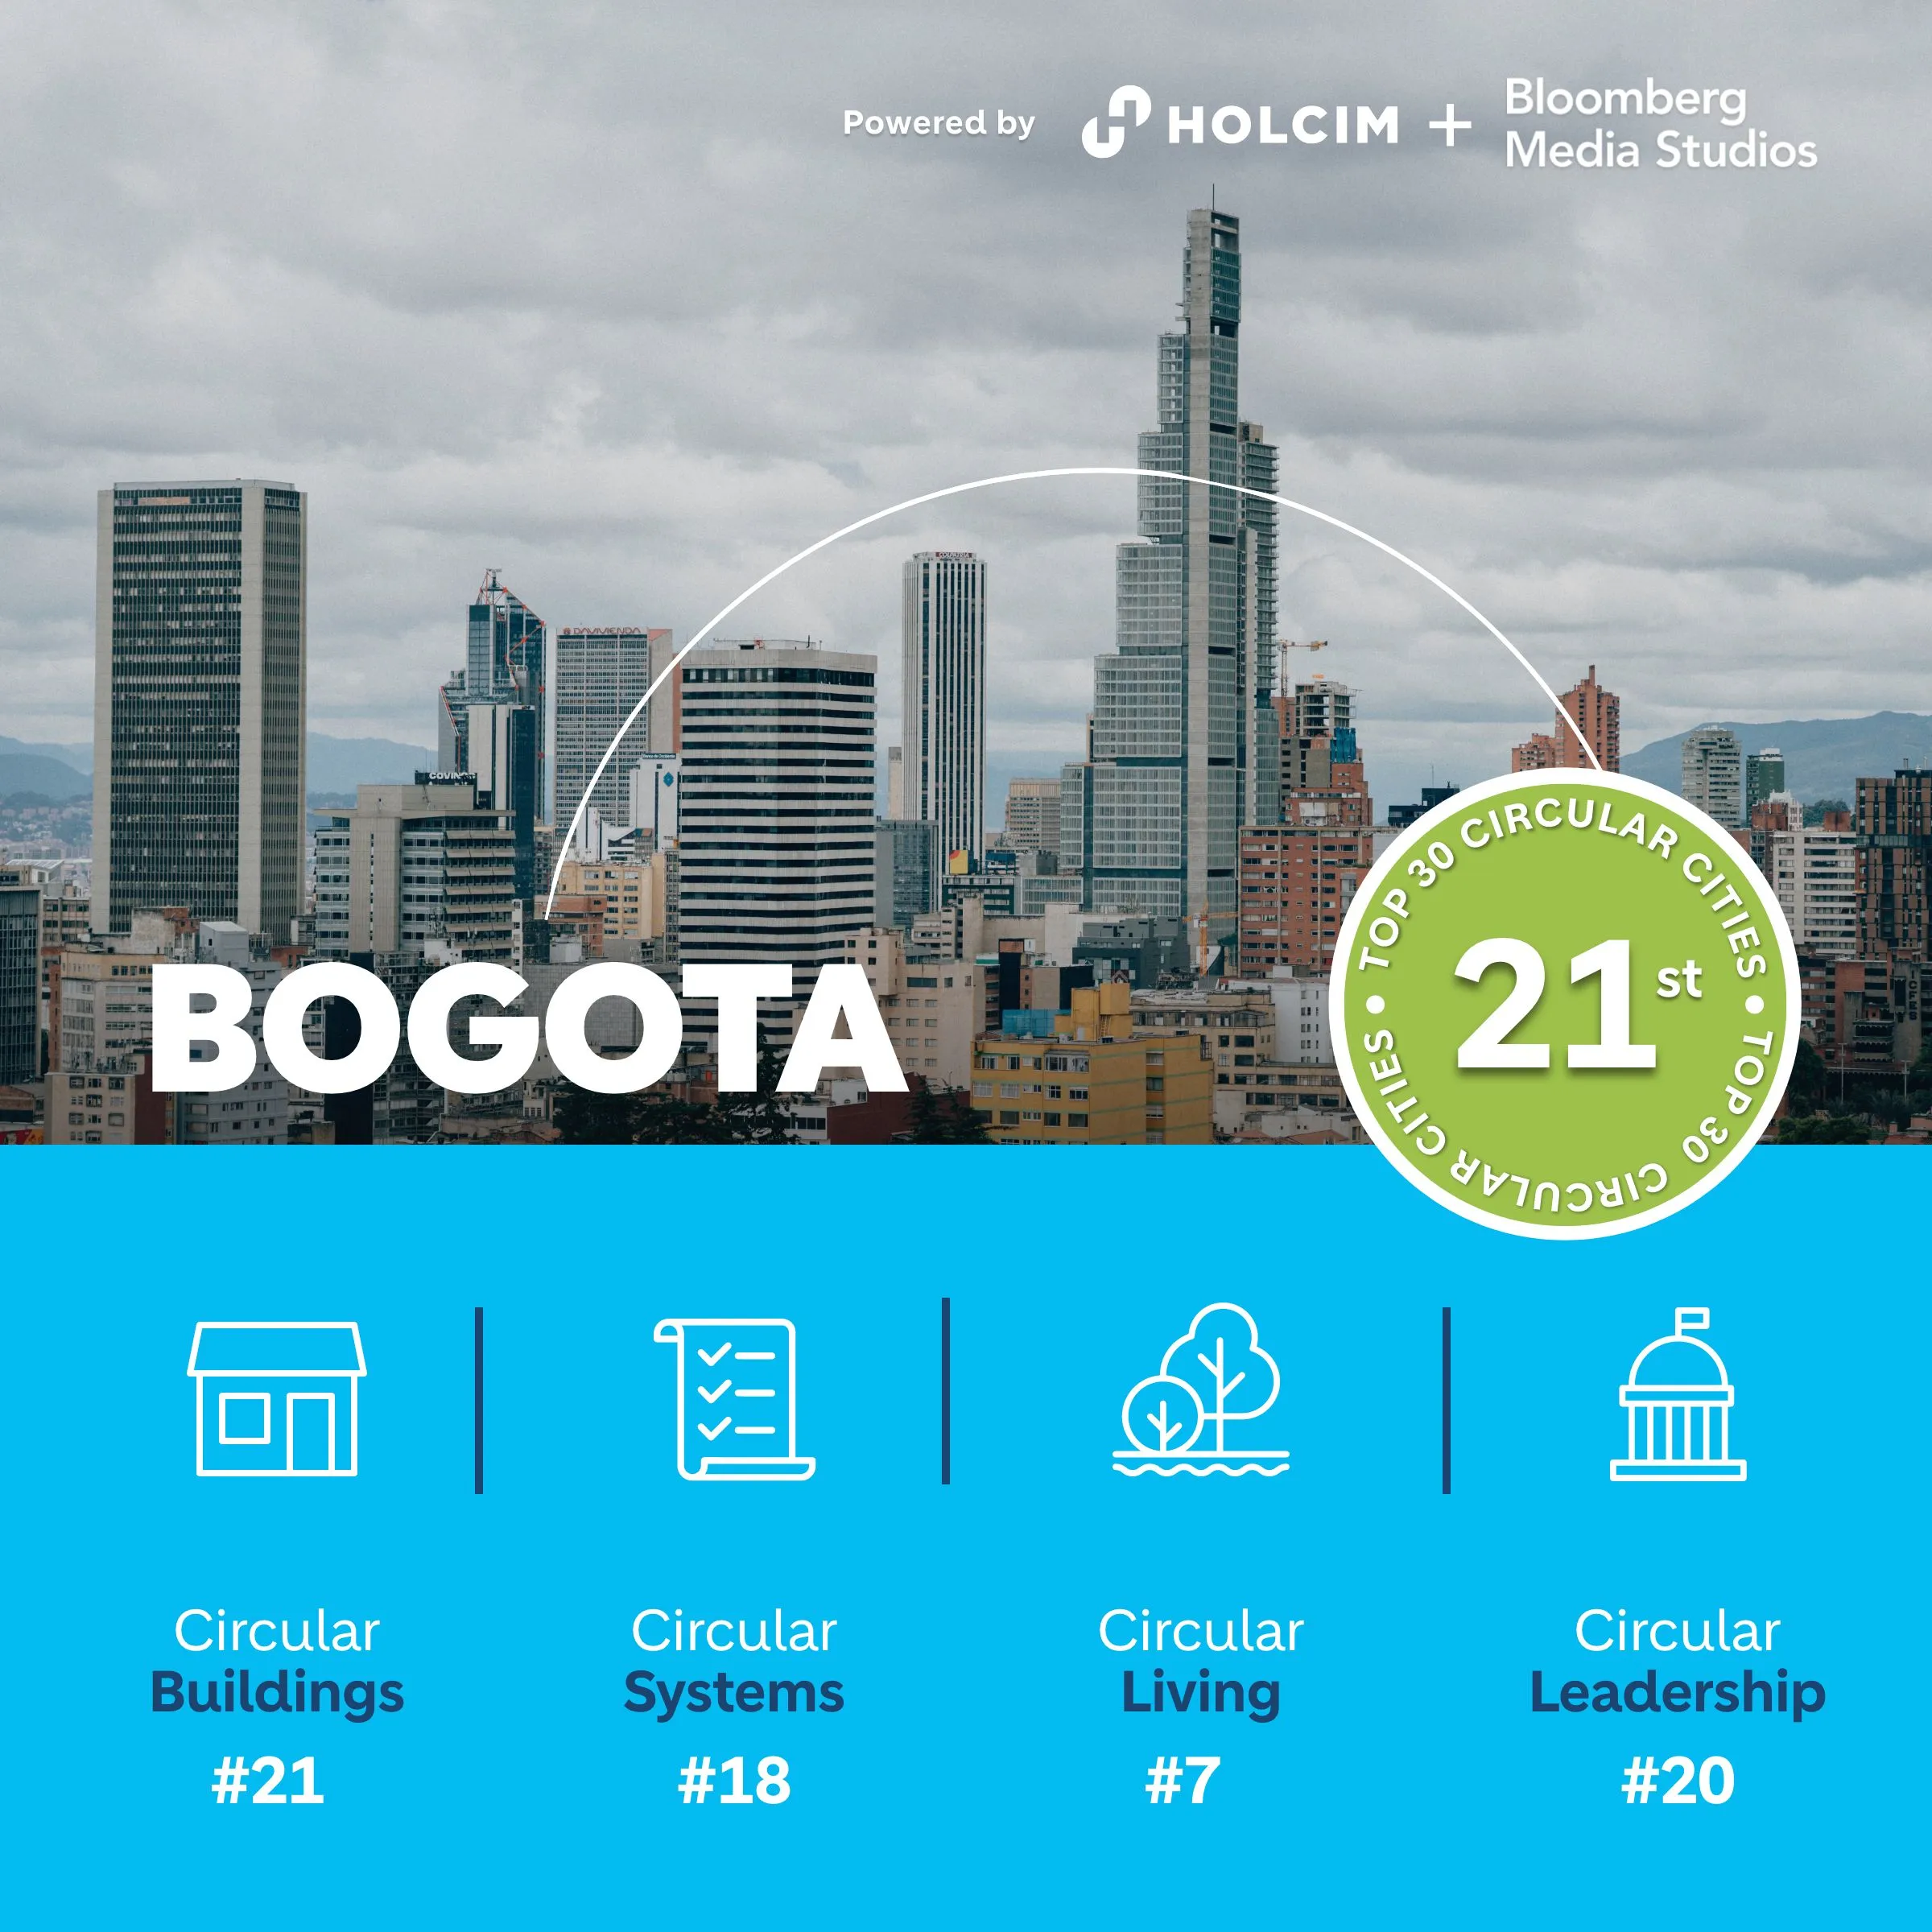 hc-bloomberg_partnership_bogota.jpg